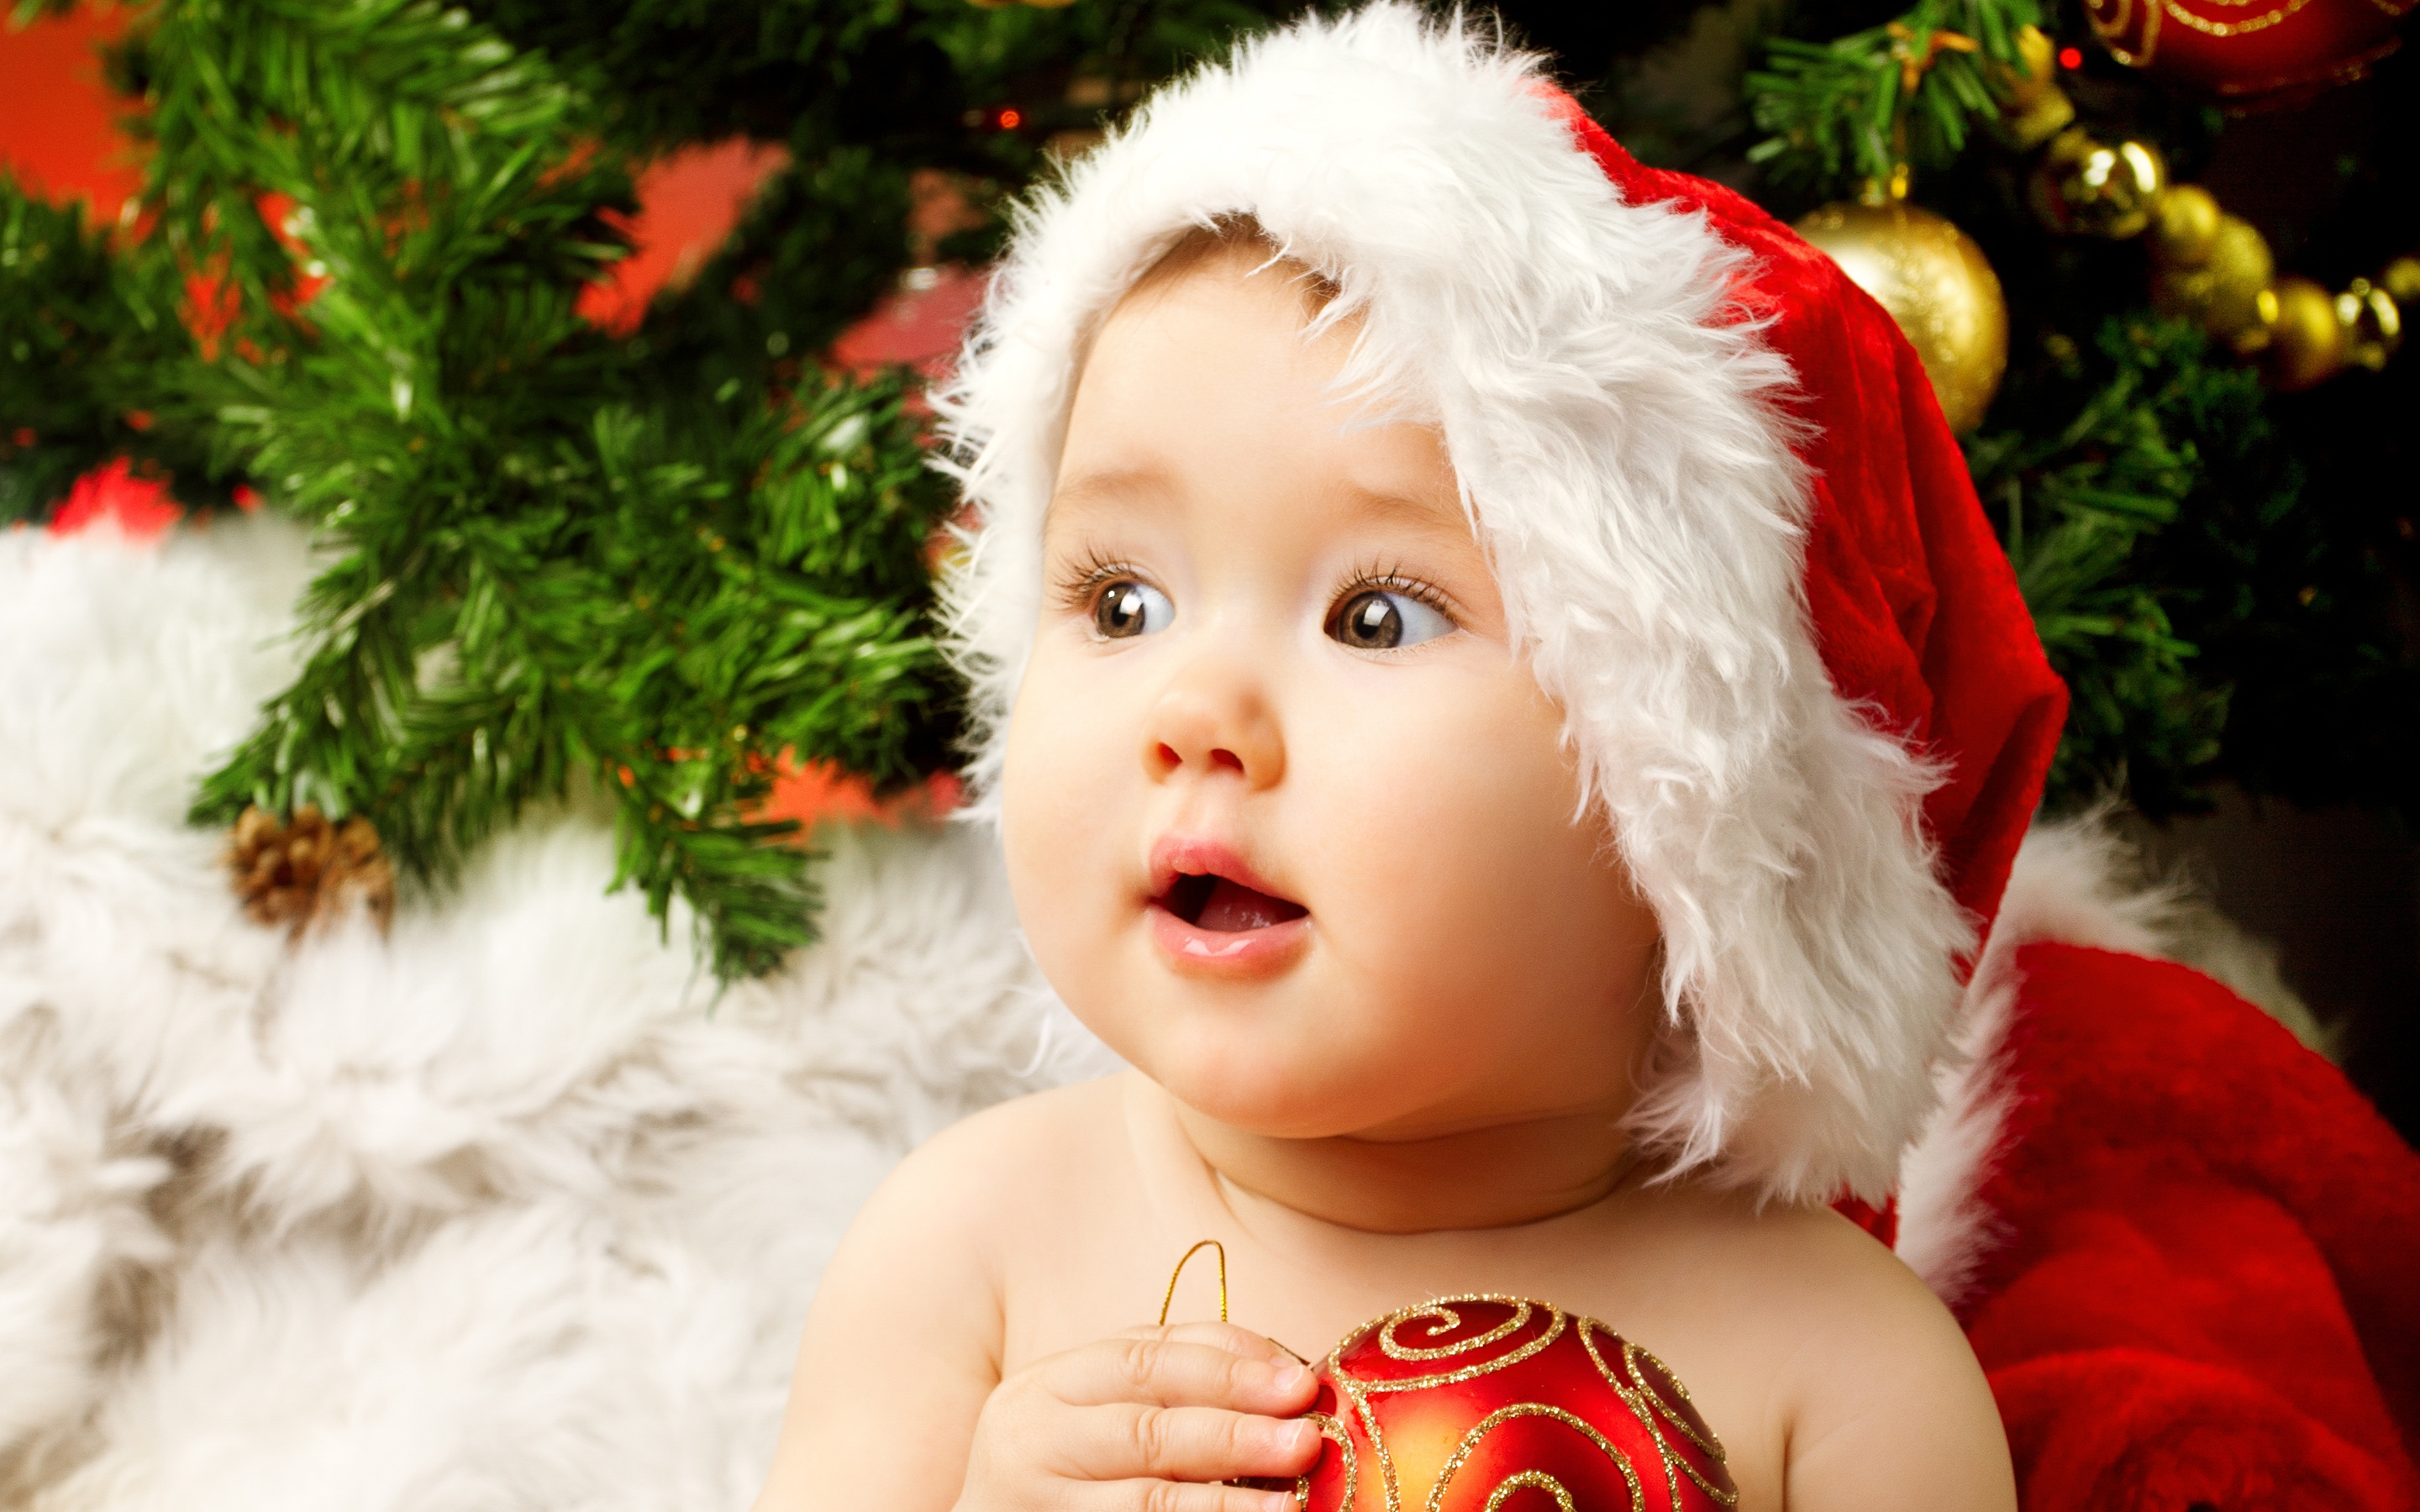 Cute Adorable Baby Santa3476610273 - Cute Adorable Baby Santa - Santa, Cute, Baby, Adorable